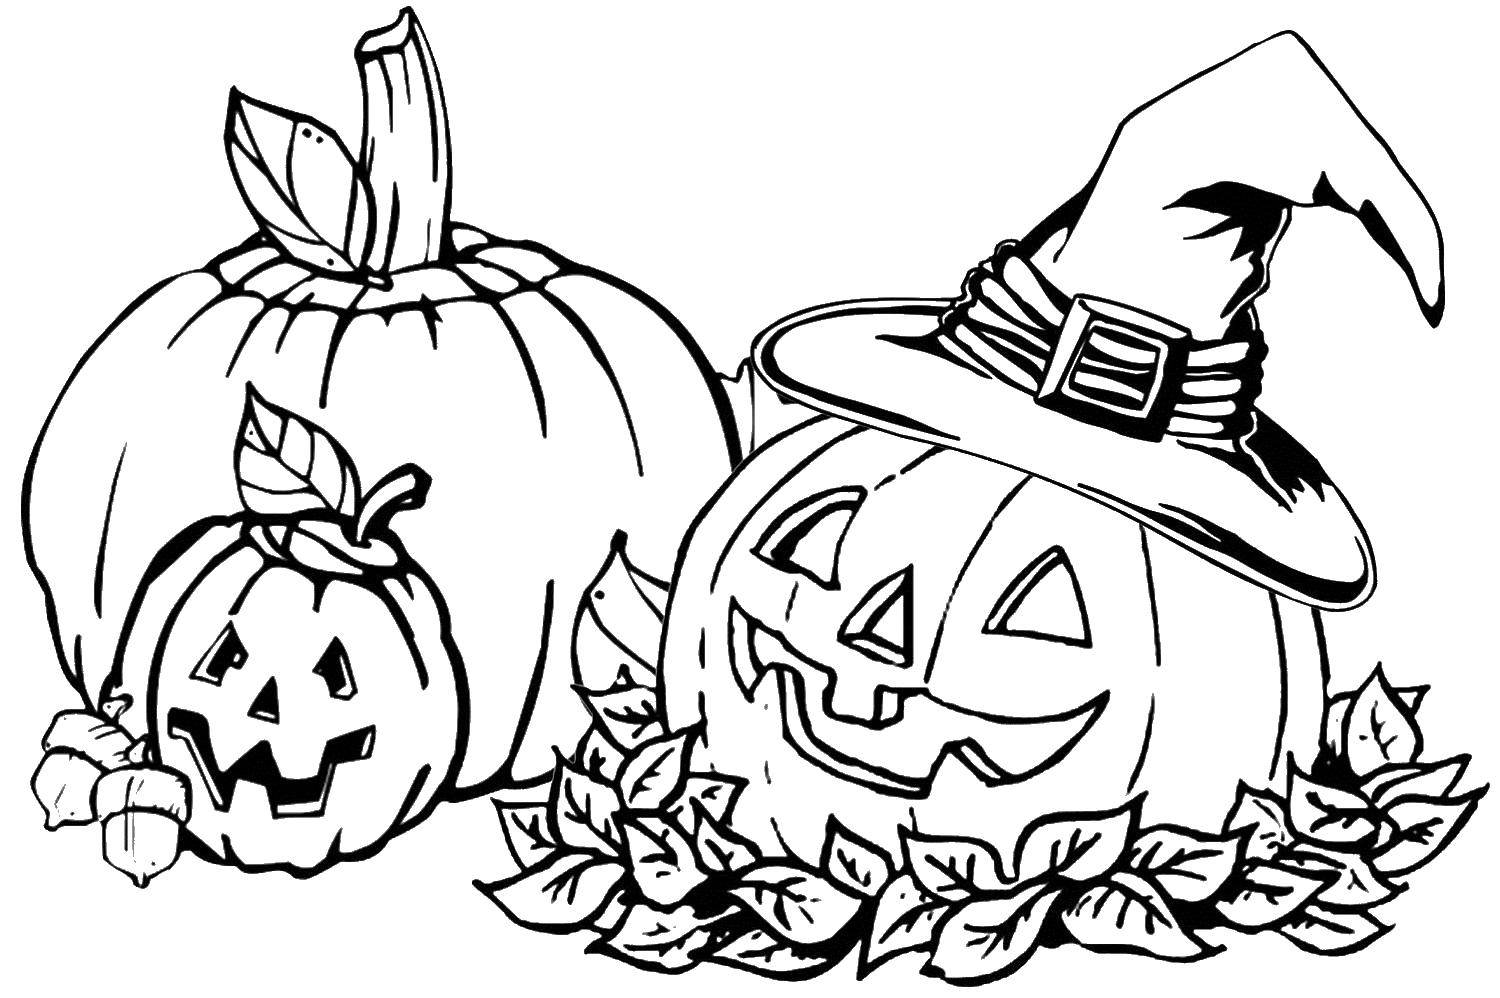 Coloring Pumpkins on Halloween. Category Halloween. Tags:  Halloween, pumpkin.